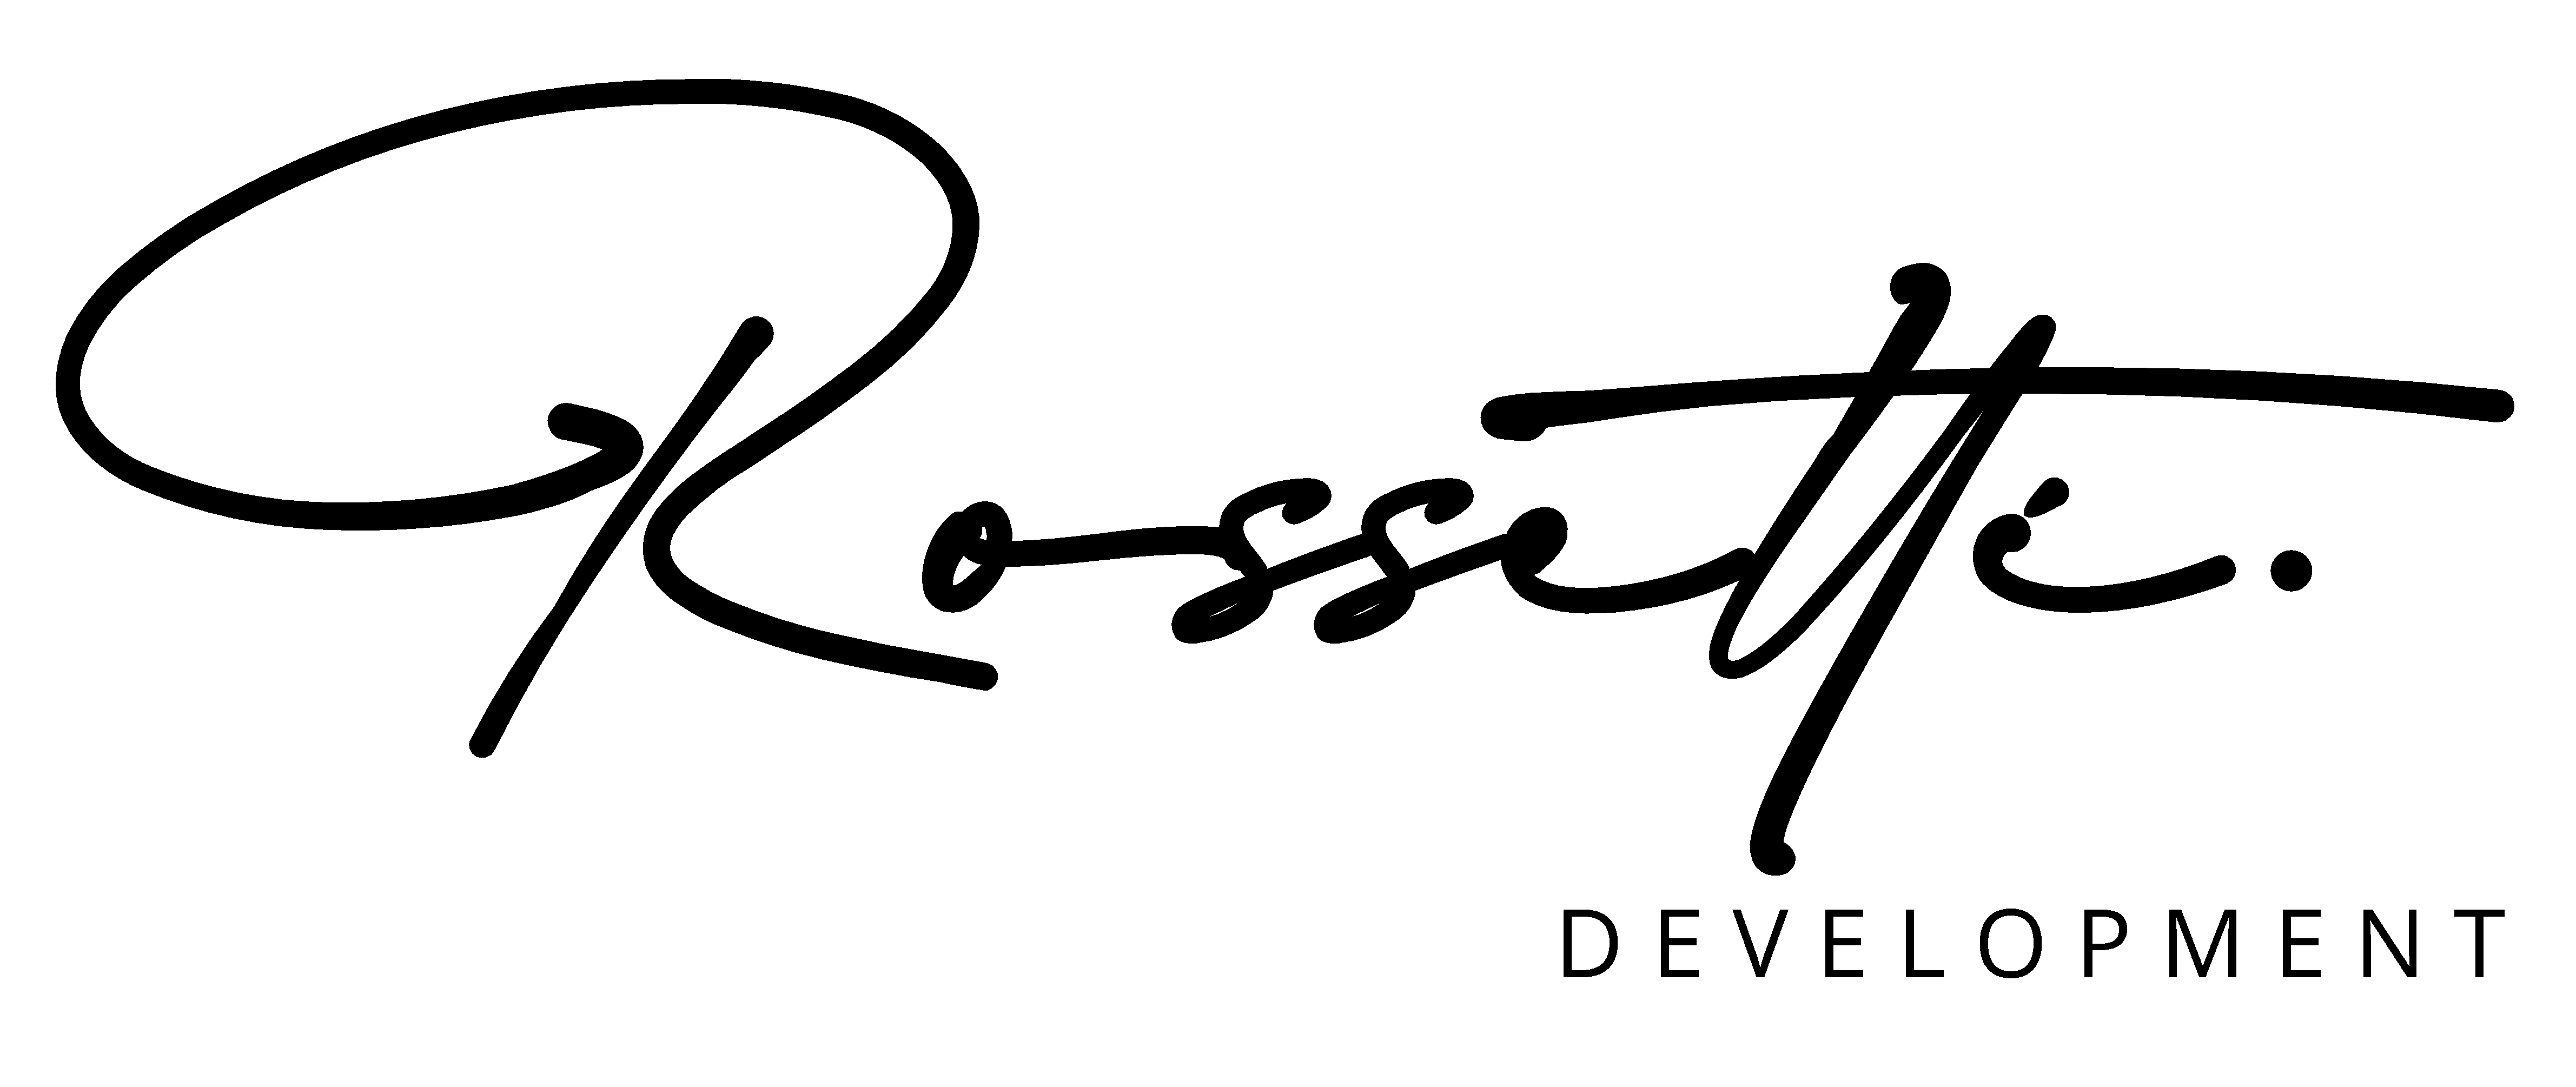 Robert Rosetti Site